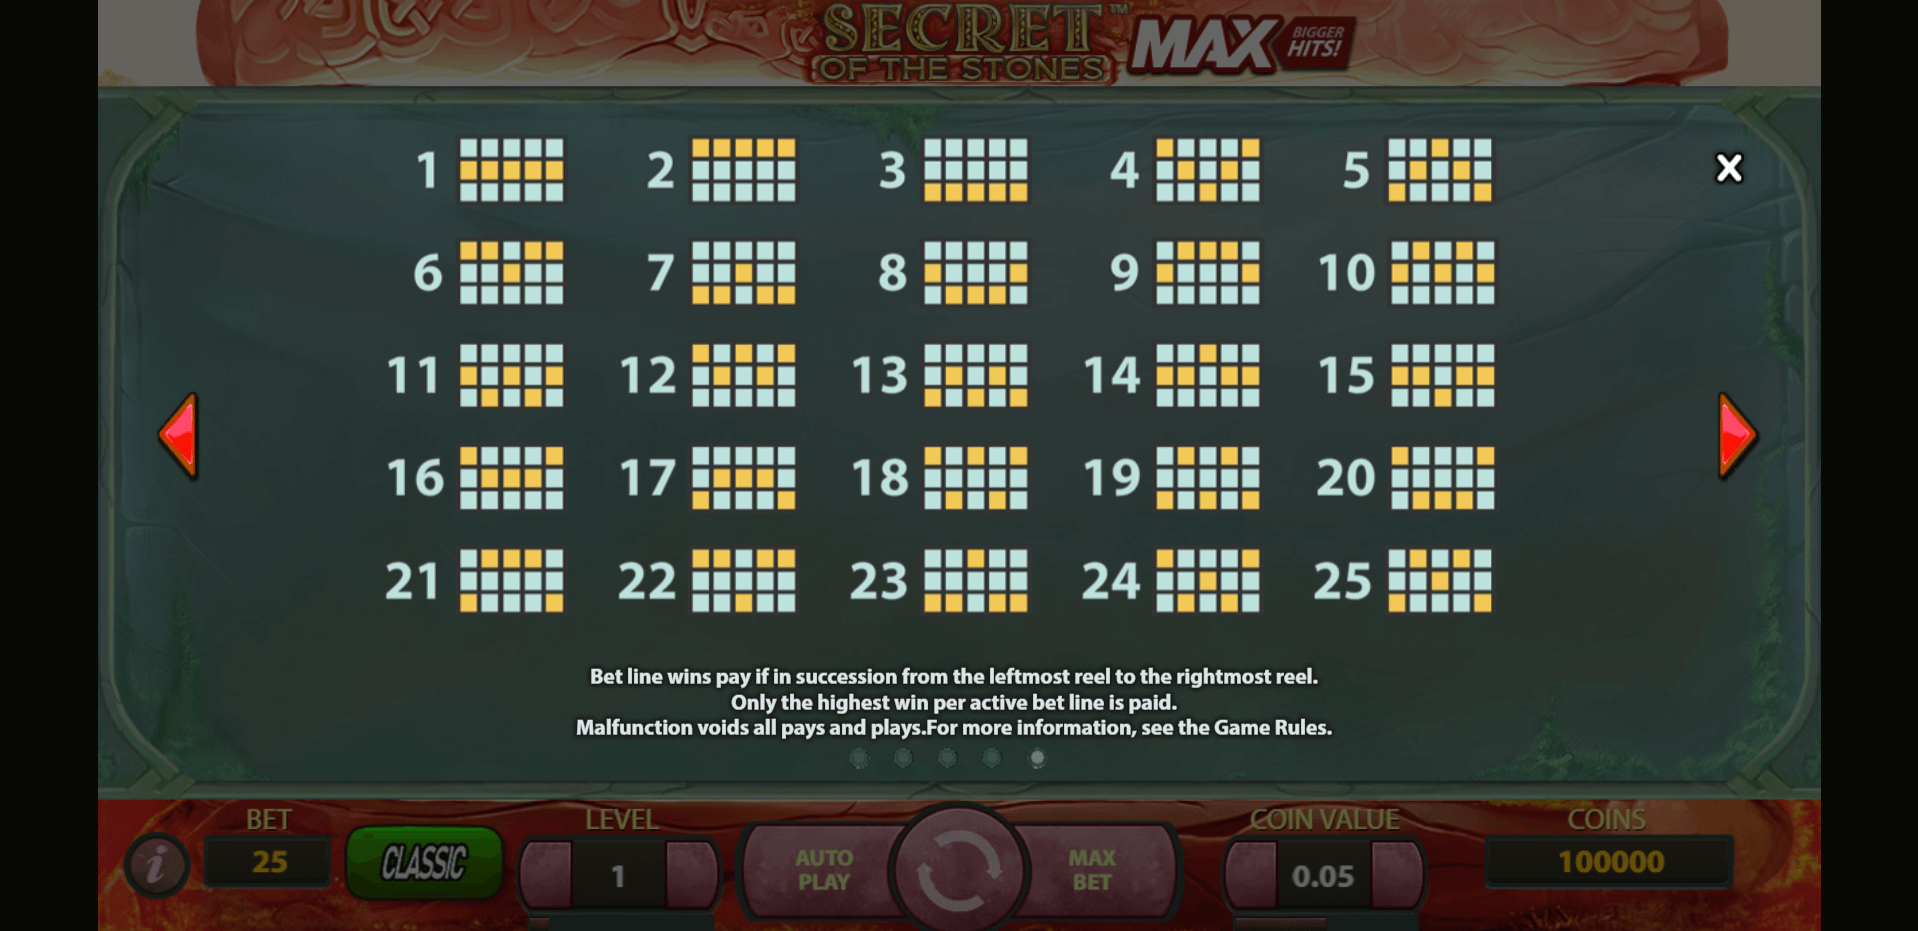 secret of the stones max slot machine detail image 4